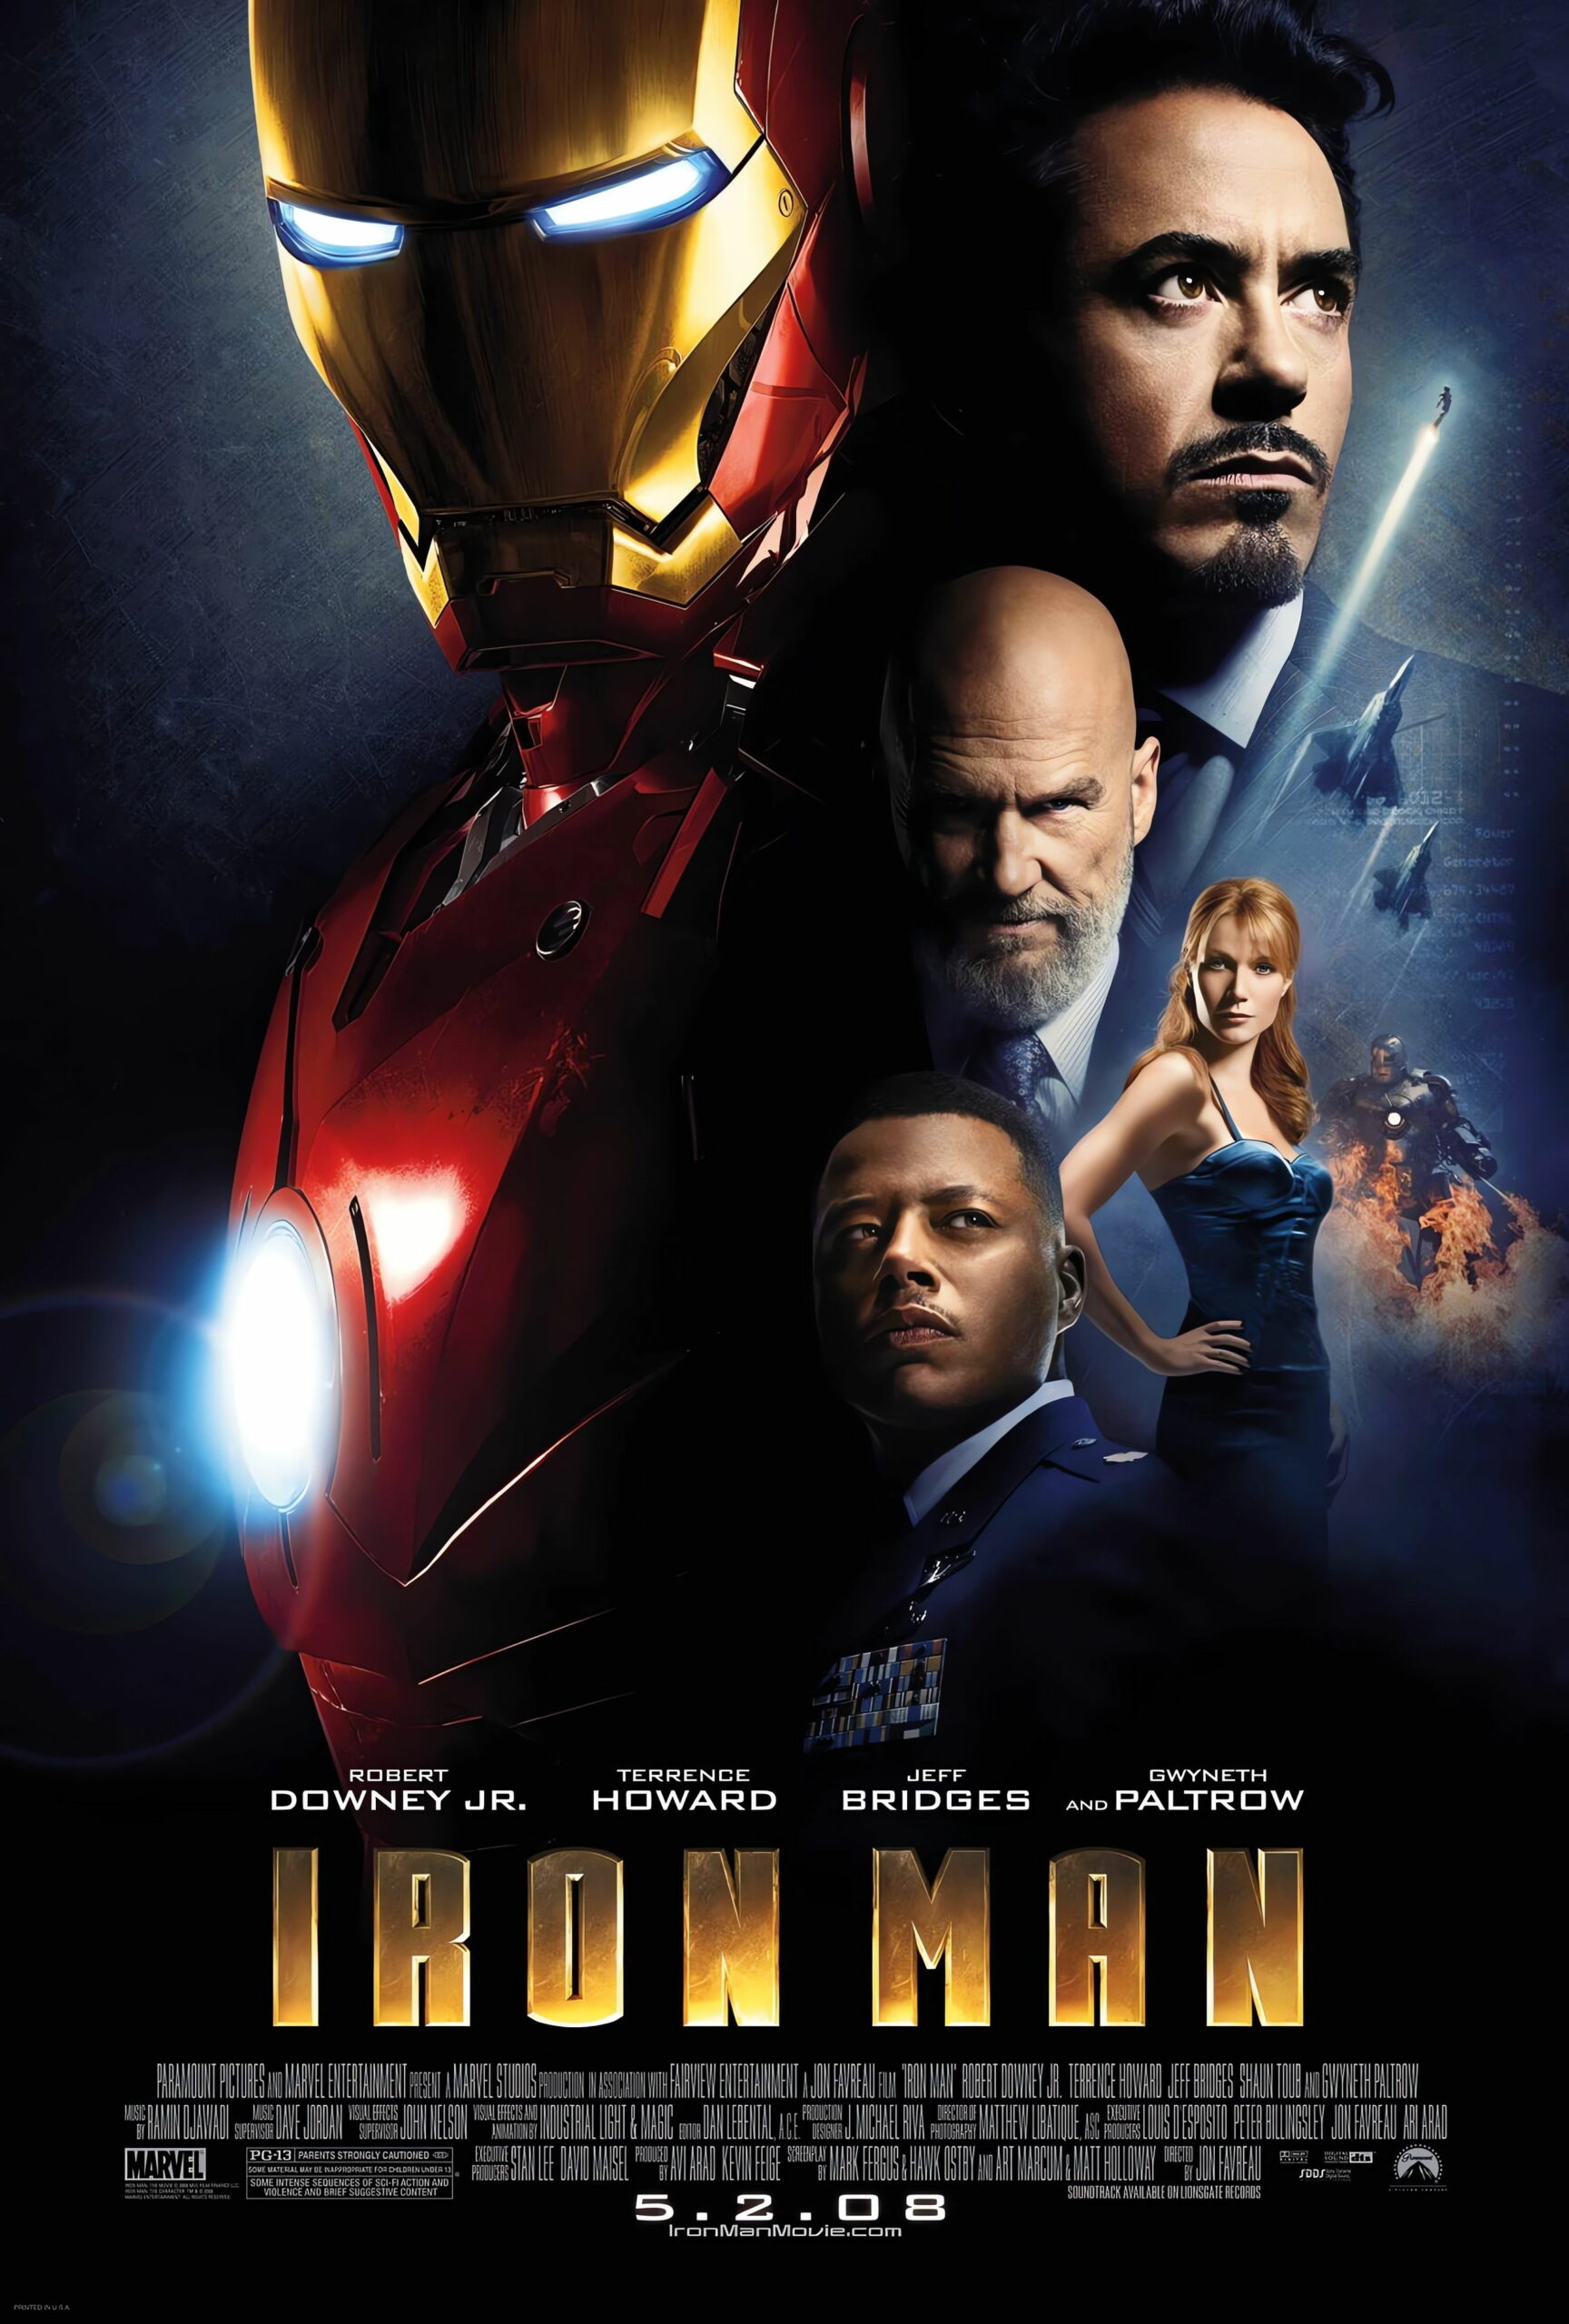 Iron Man 2008 Poster